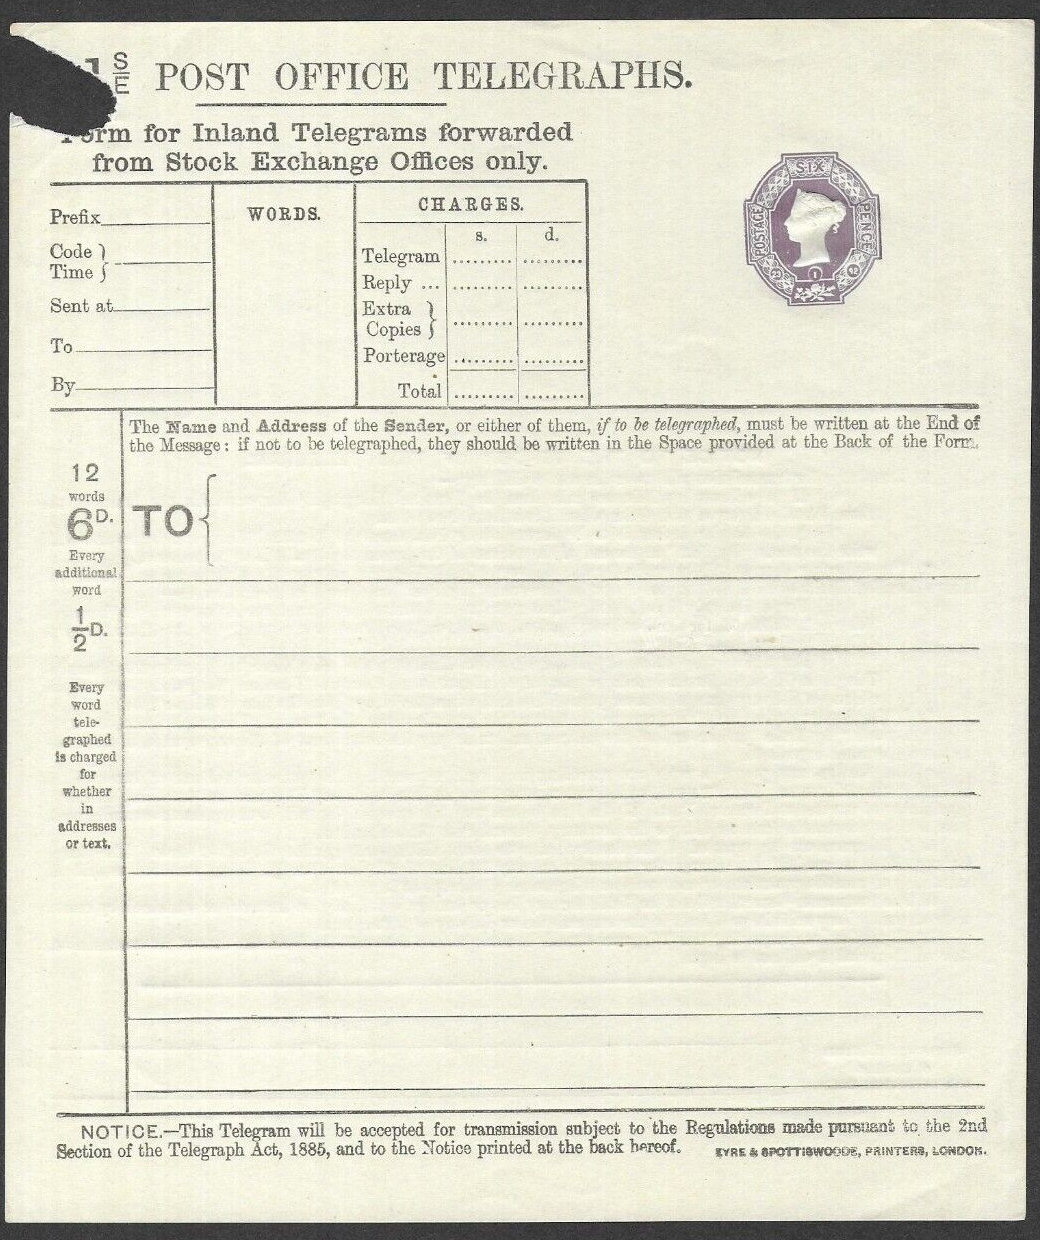 6d A1S/E Post Office Telegraph Form - front